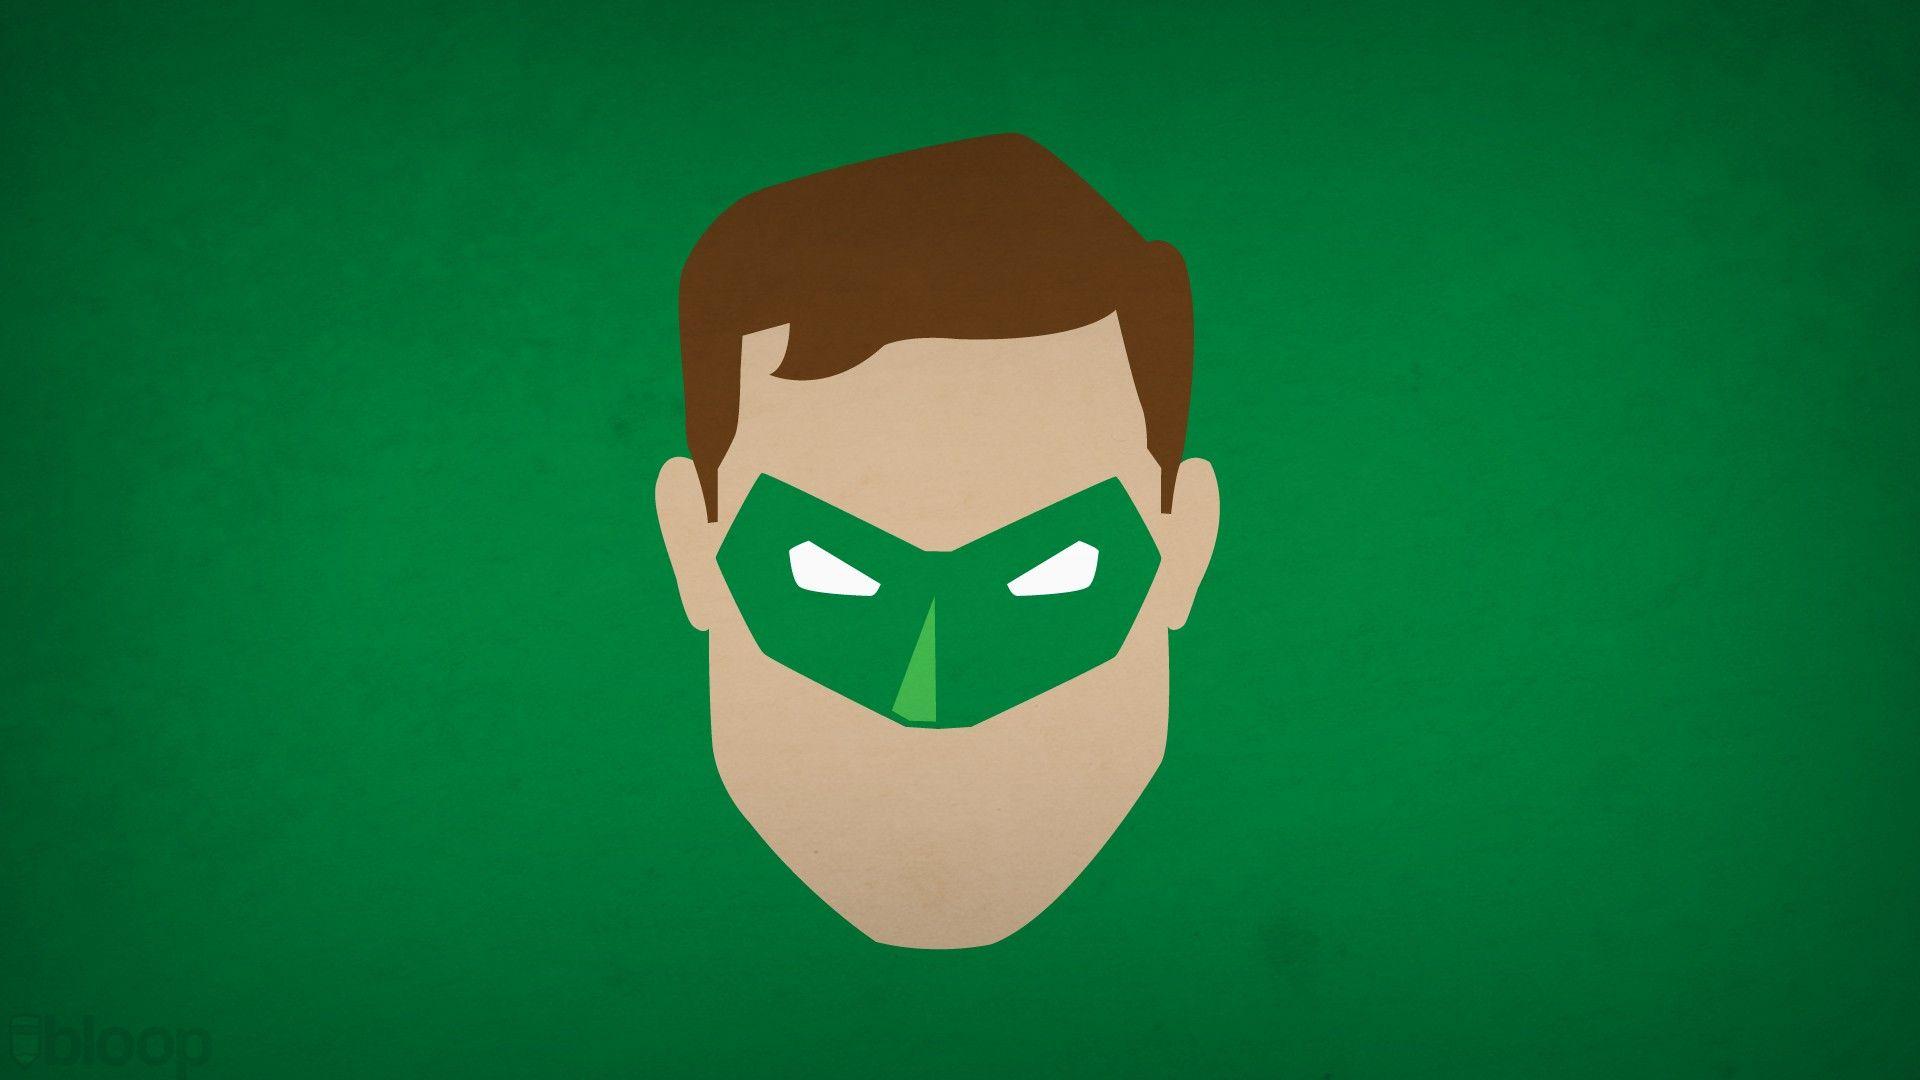 Green Background Green Lantern Minimalistic Superheroes